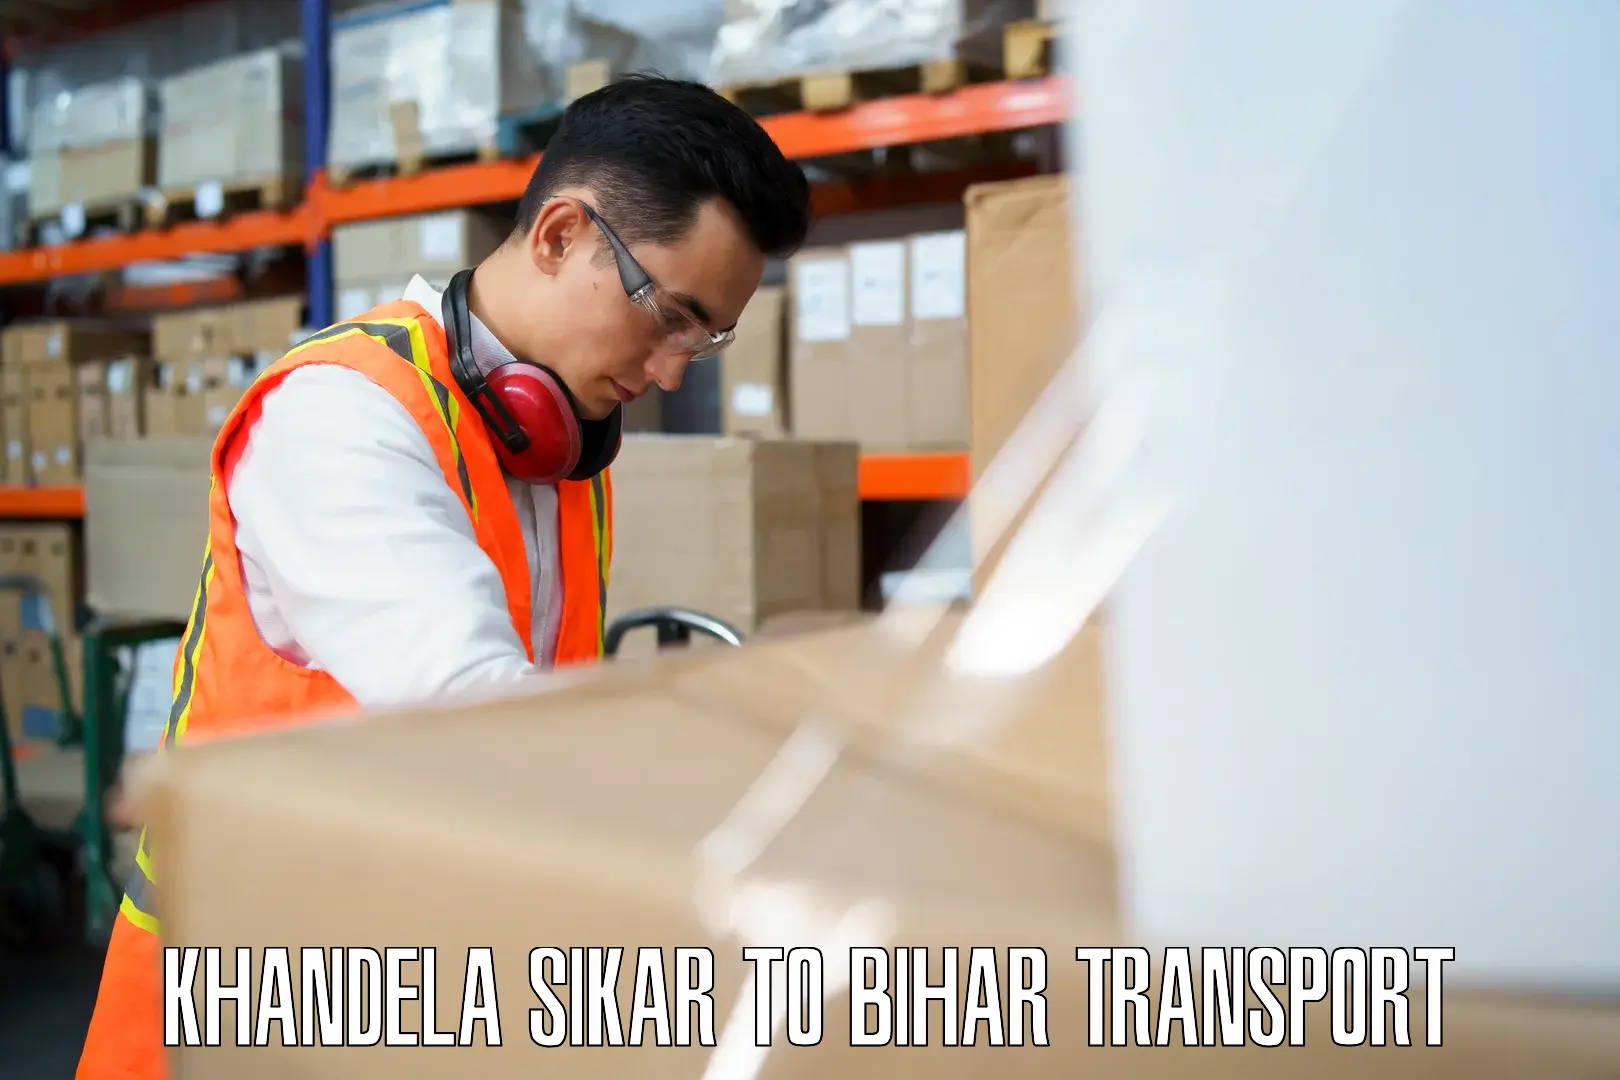 Part load transport service in India Khandela Sikar to Bihar